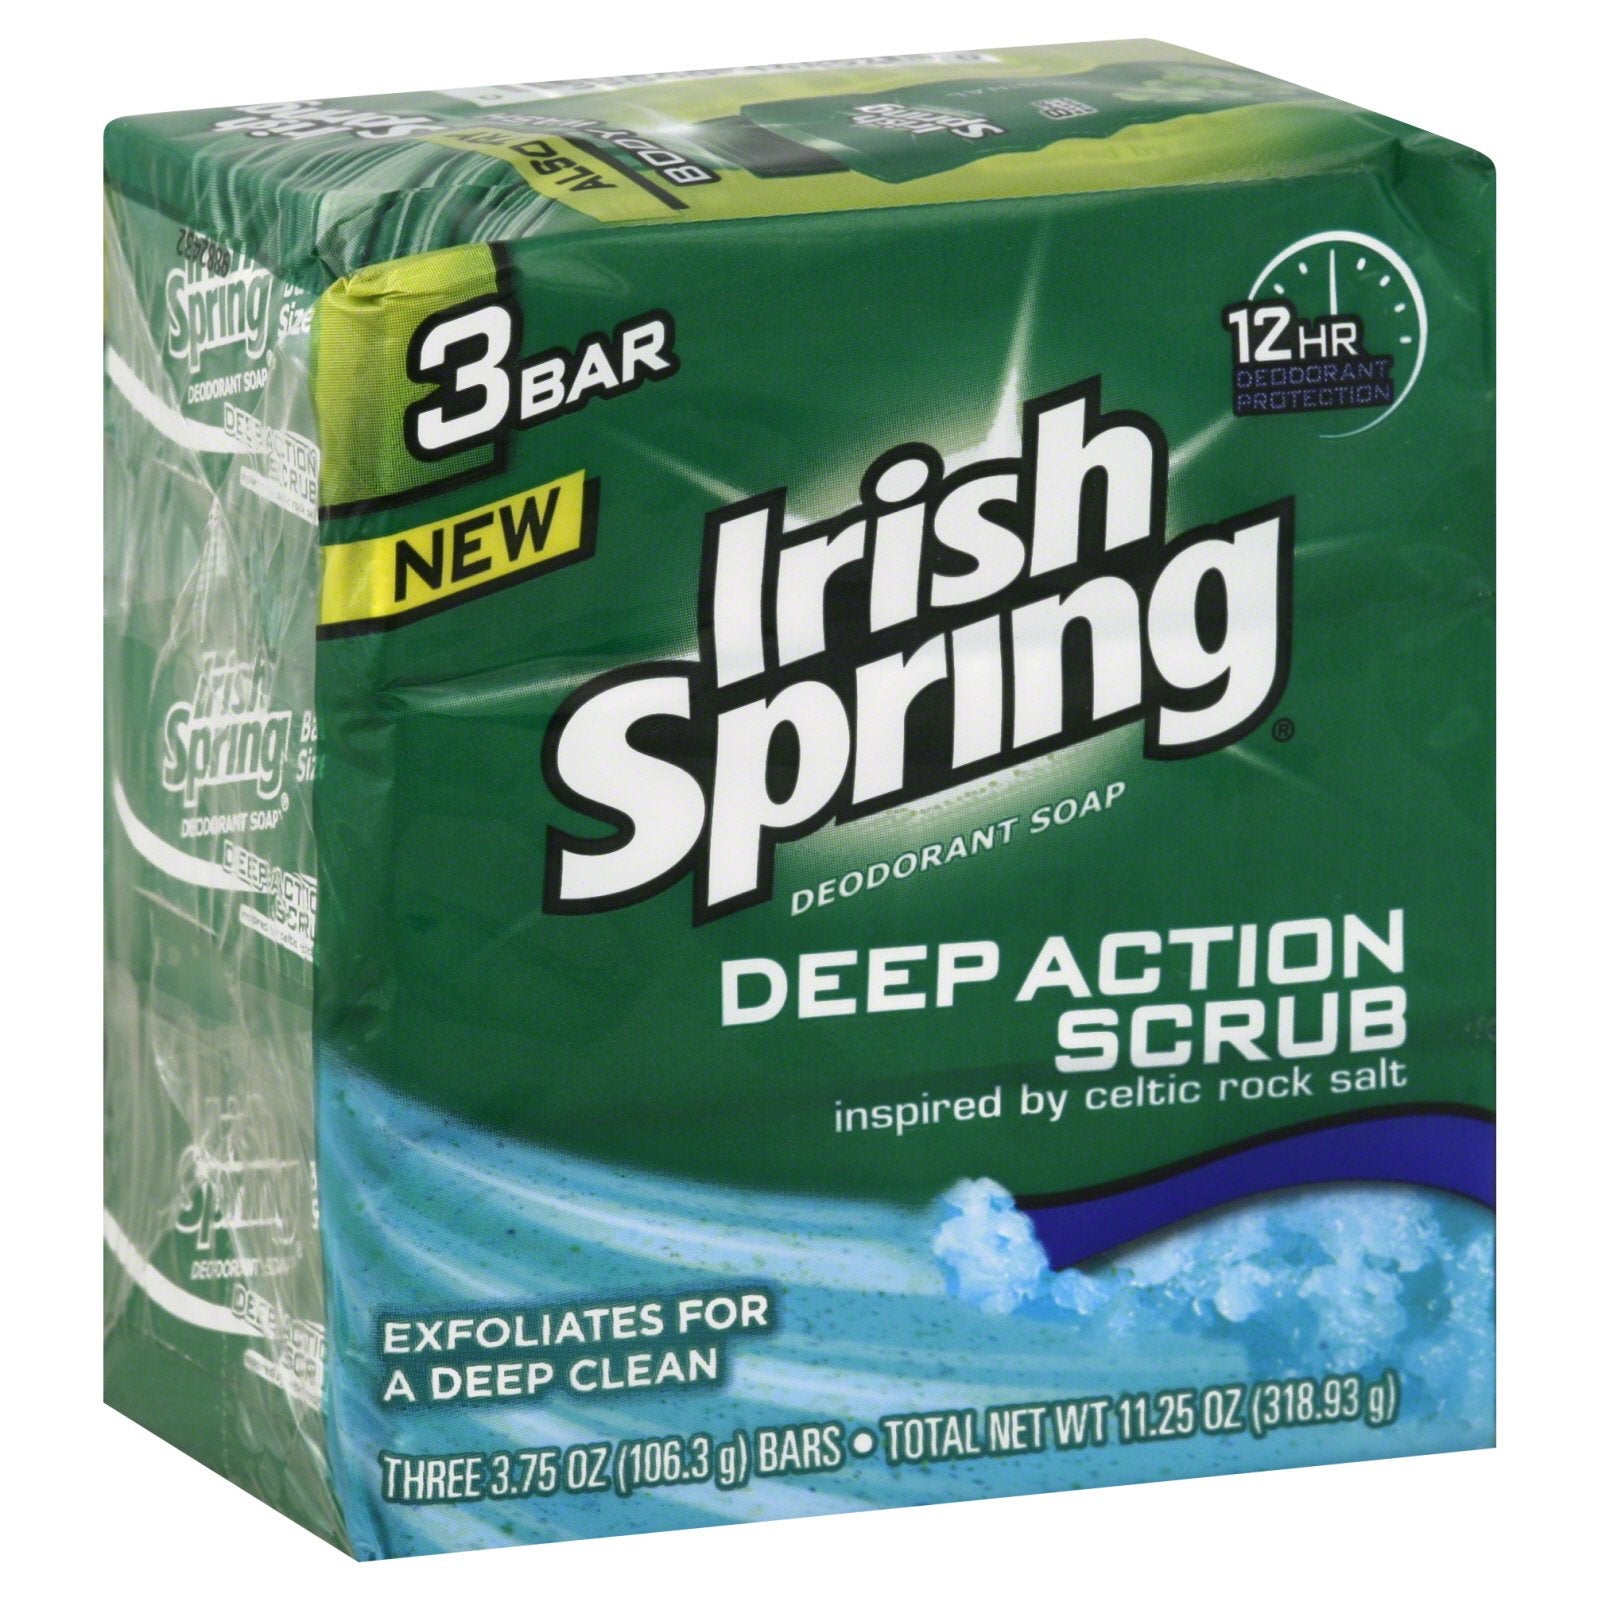 Deodorant Bar Soap Irish Spring Deep Action Scrub 3.75oz- 3 Pack - Case of 18 Packs 114186